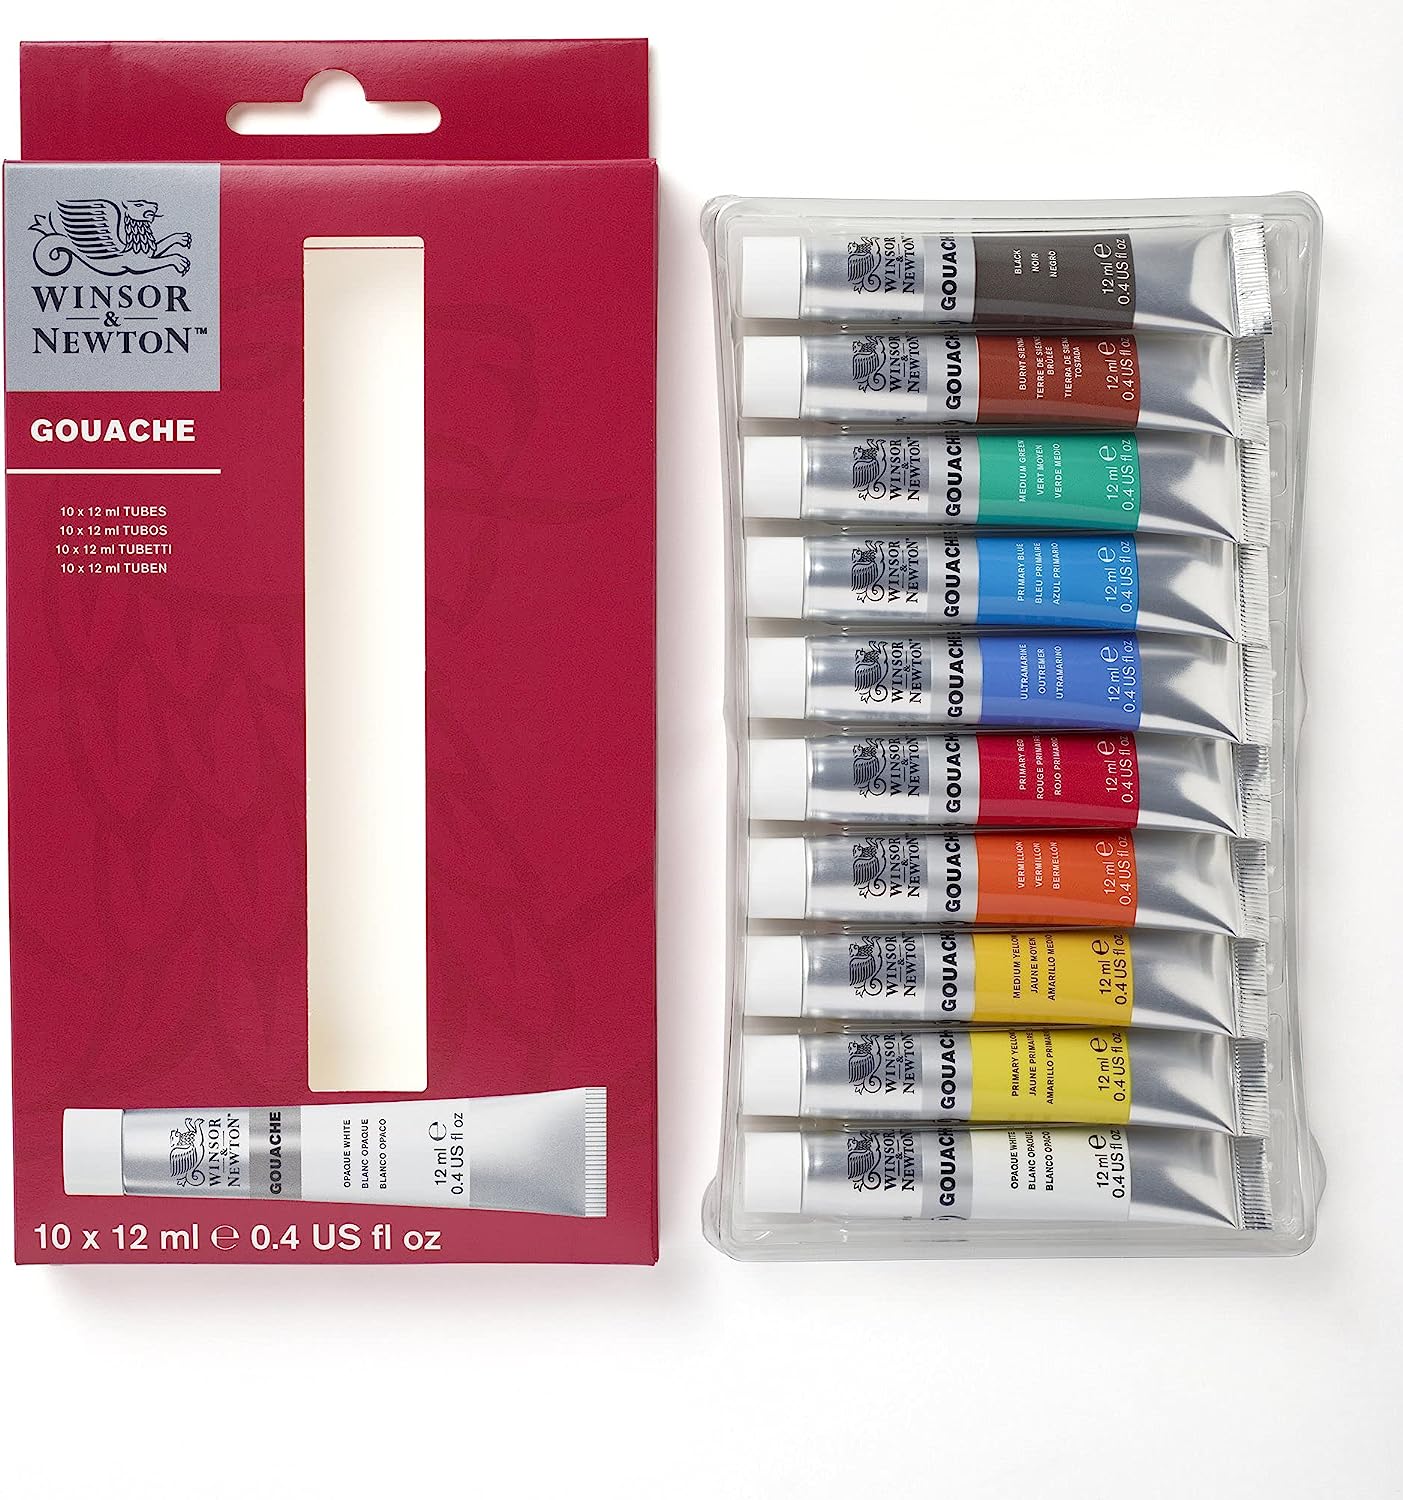 Winsor & Newton Designers Gouache box set containing 10 tubes of different colors.